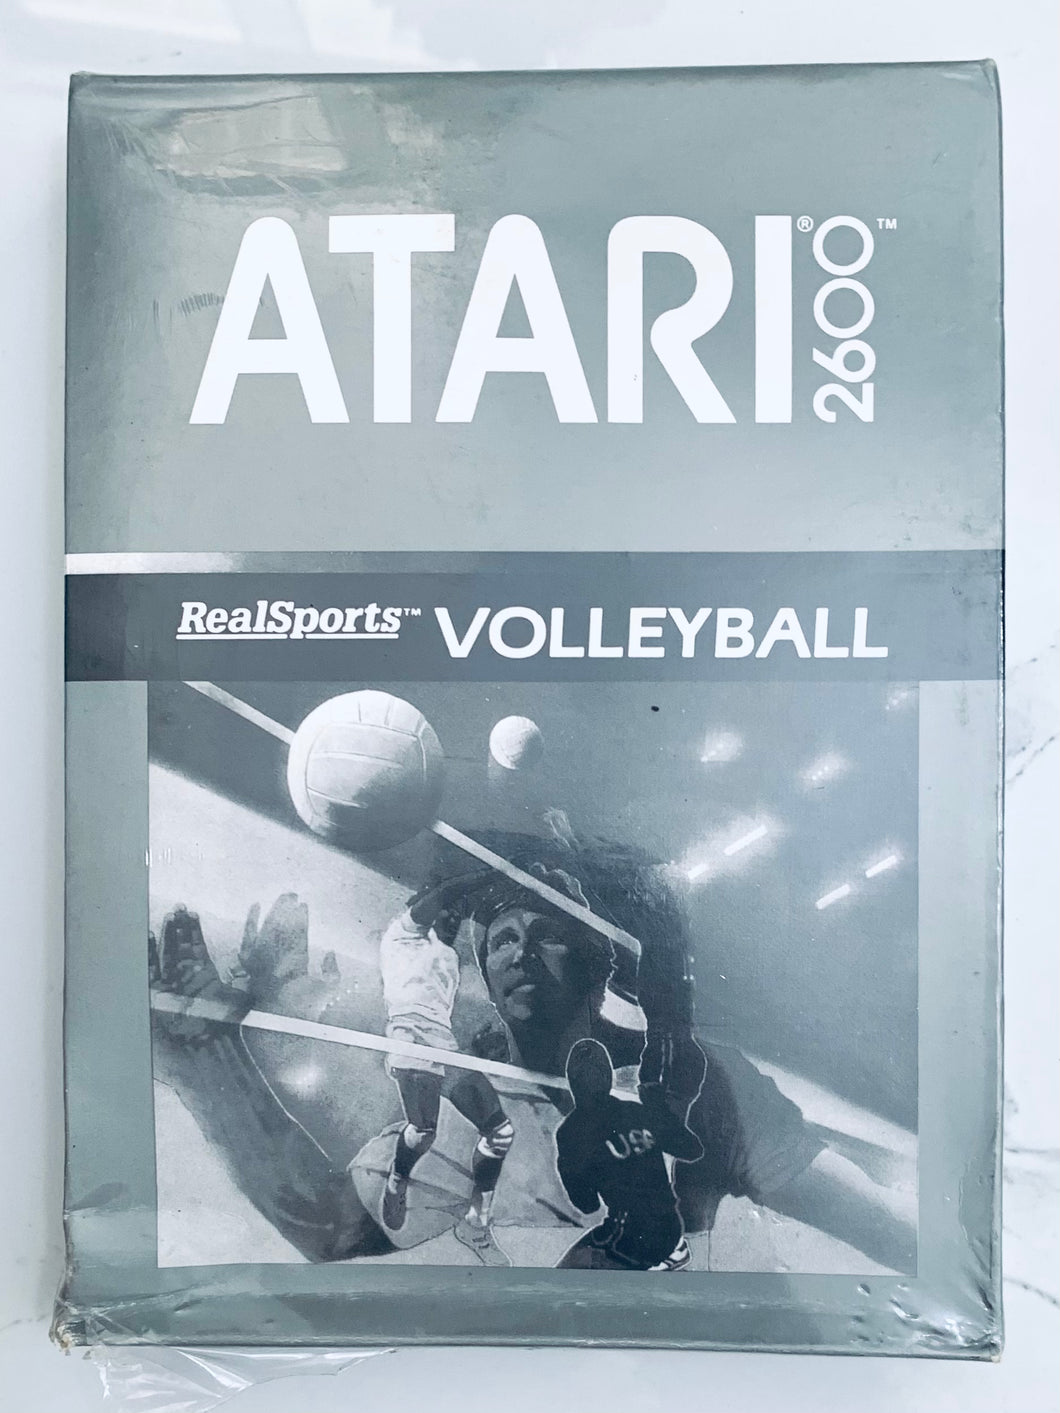 RealSports Volleyball - Atari VCS 2600 - NTSC - Brand New